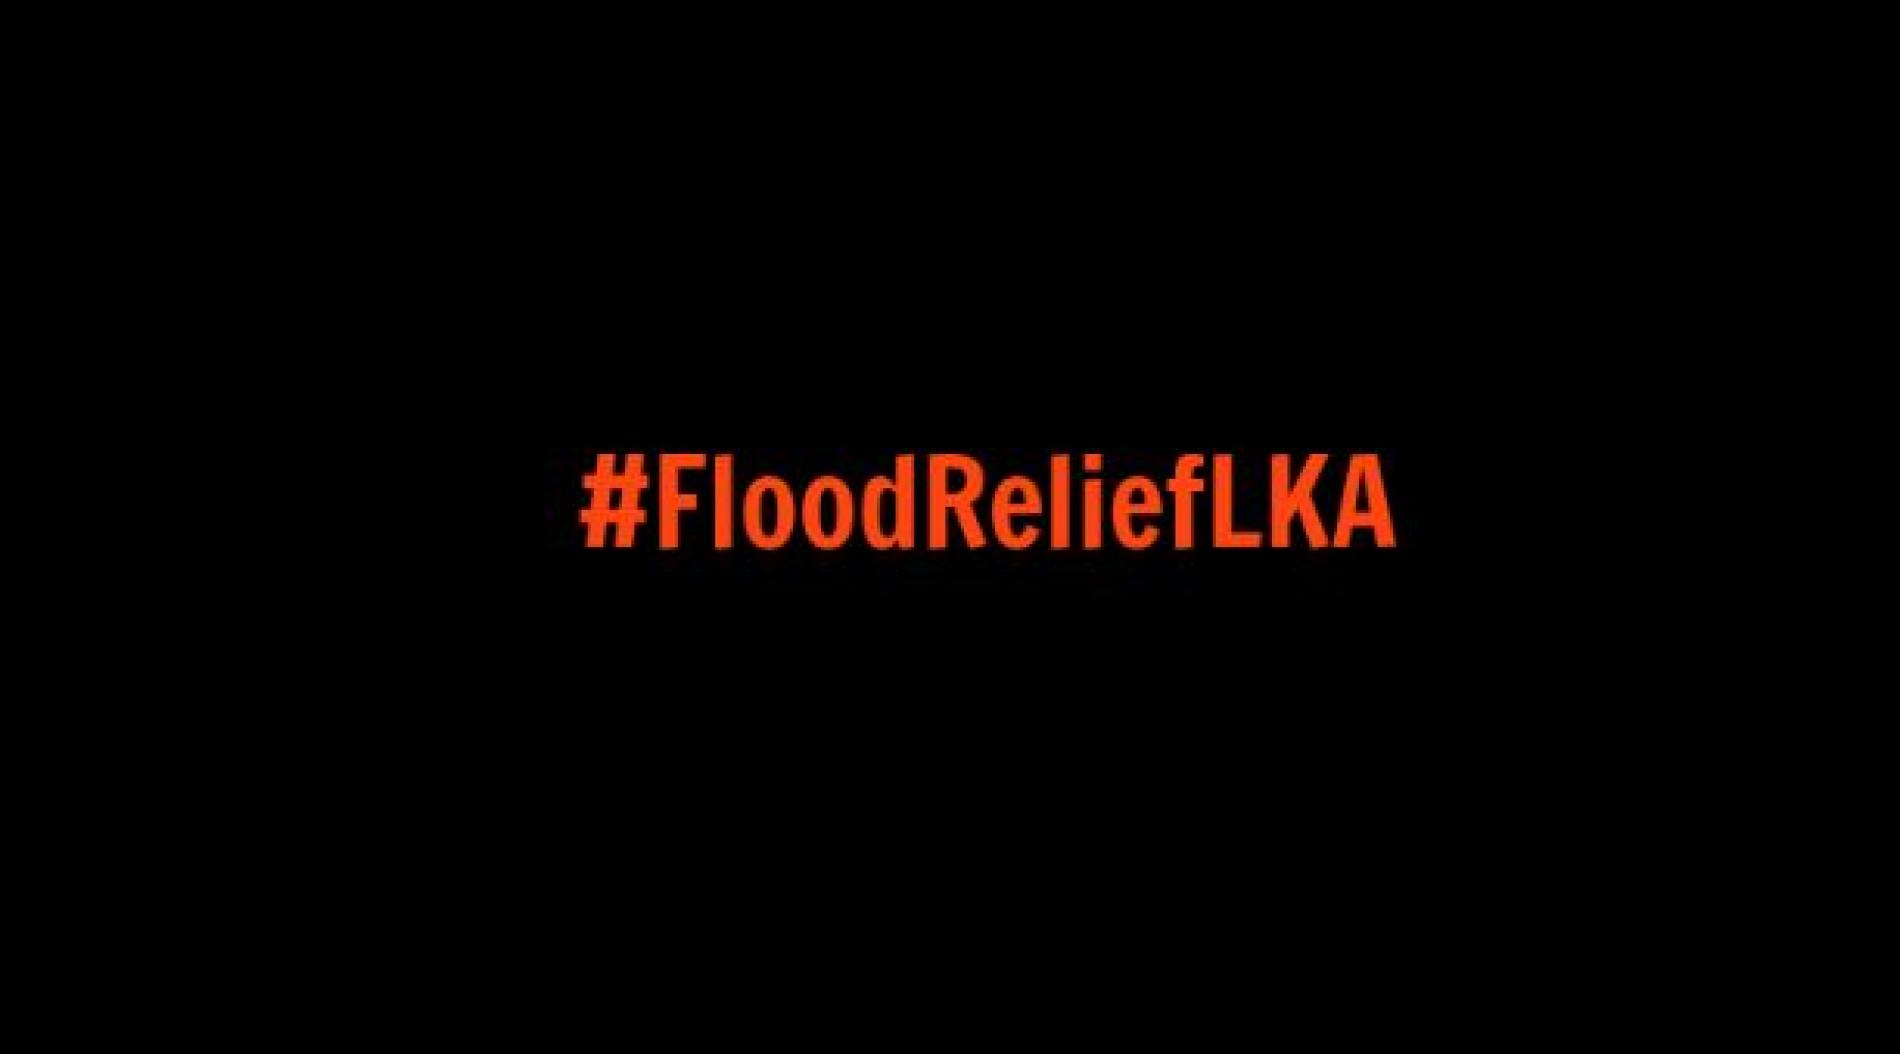 #FloodReliefLKA (updated 31/5)